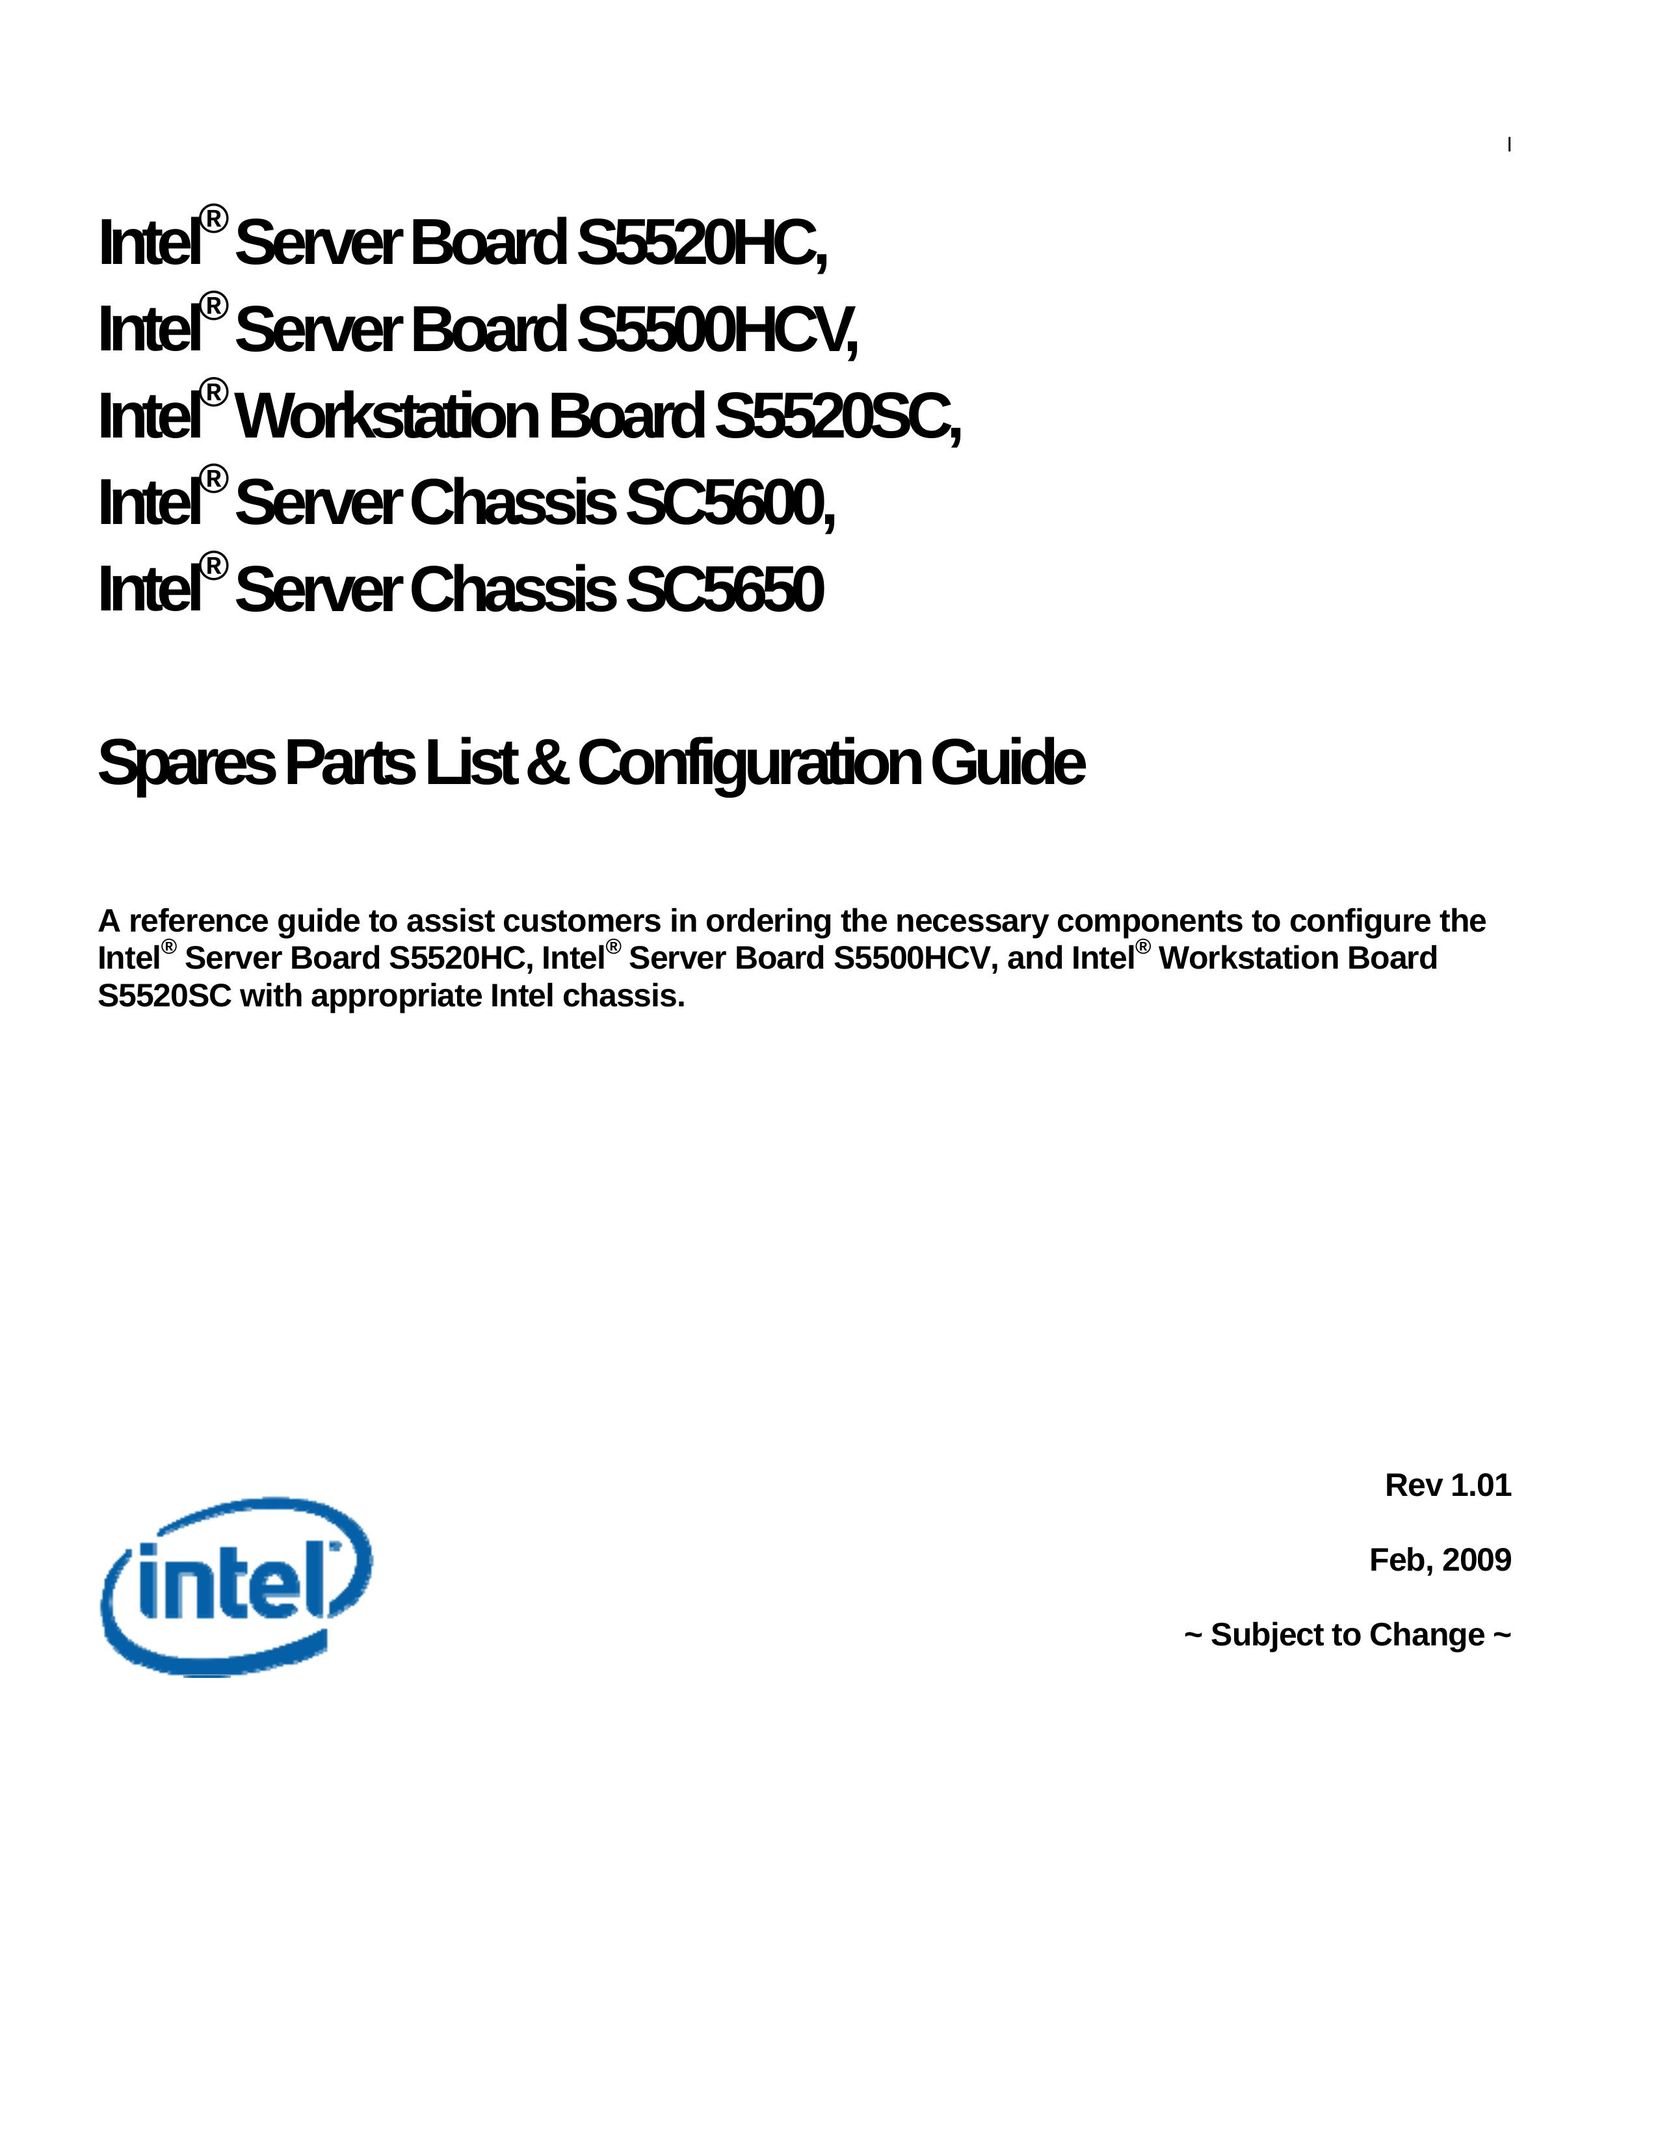 Intel S5500HCV Server User Manual